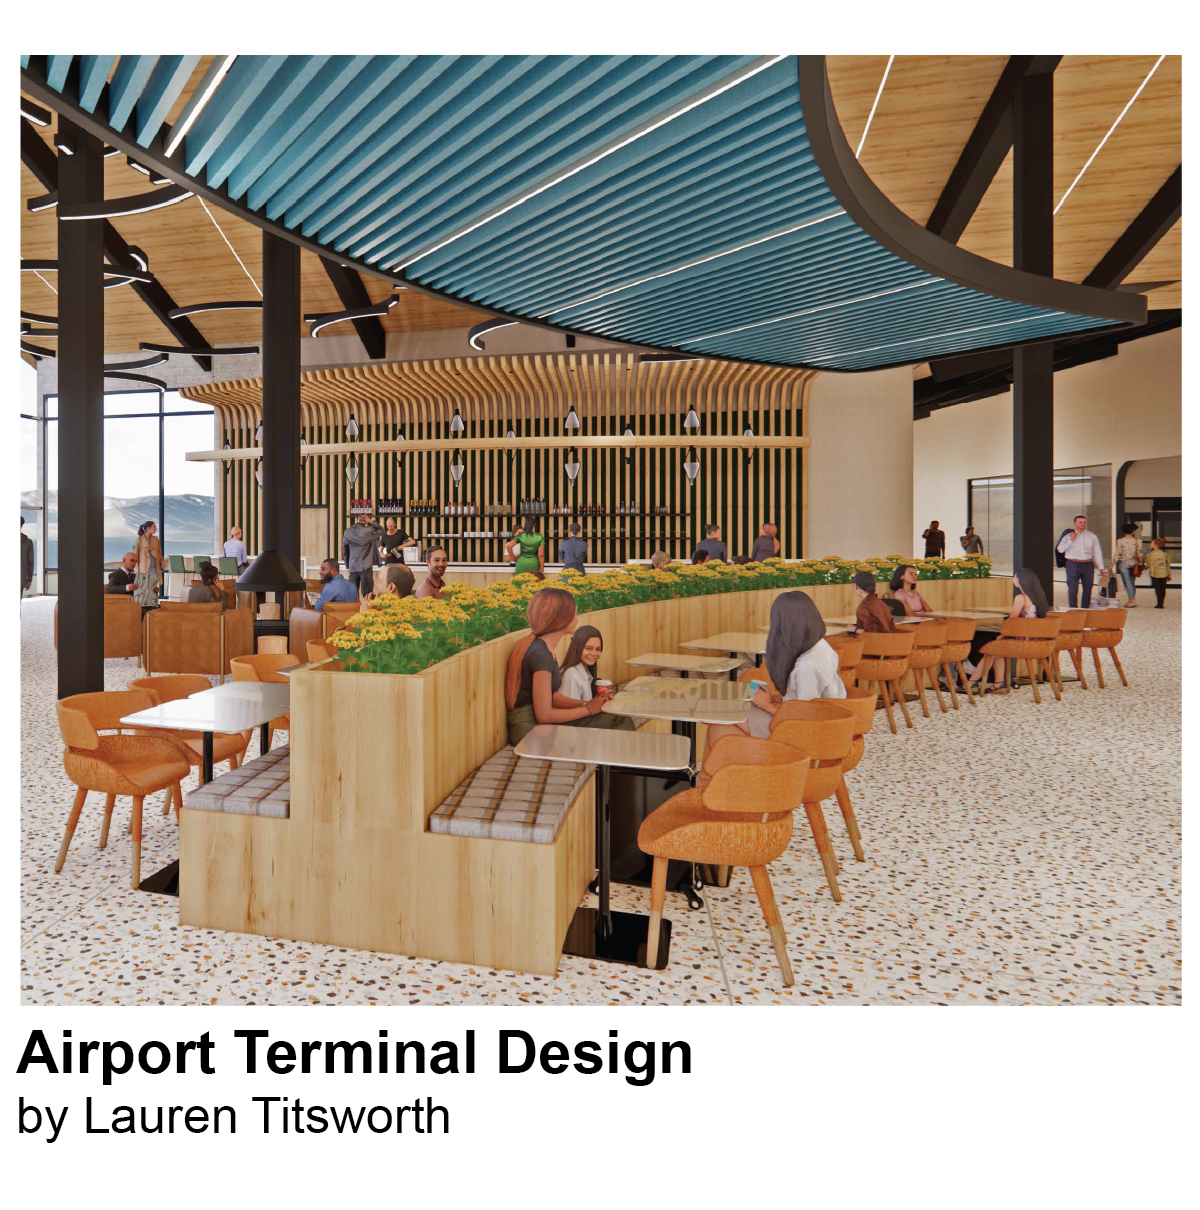 Airport Terminal Design by Lauren Titsworth